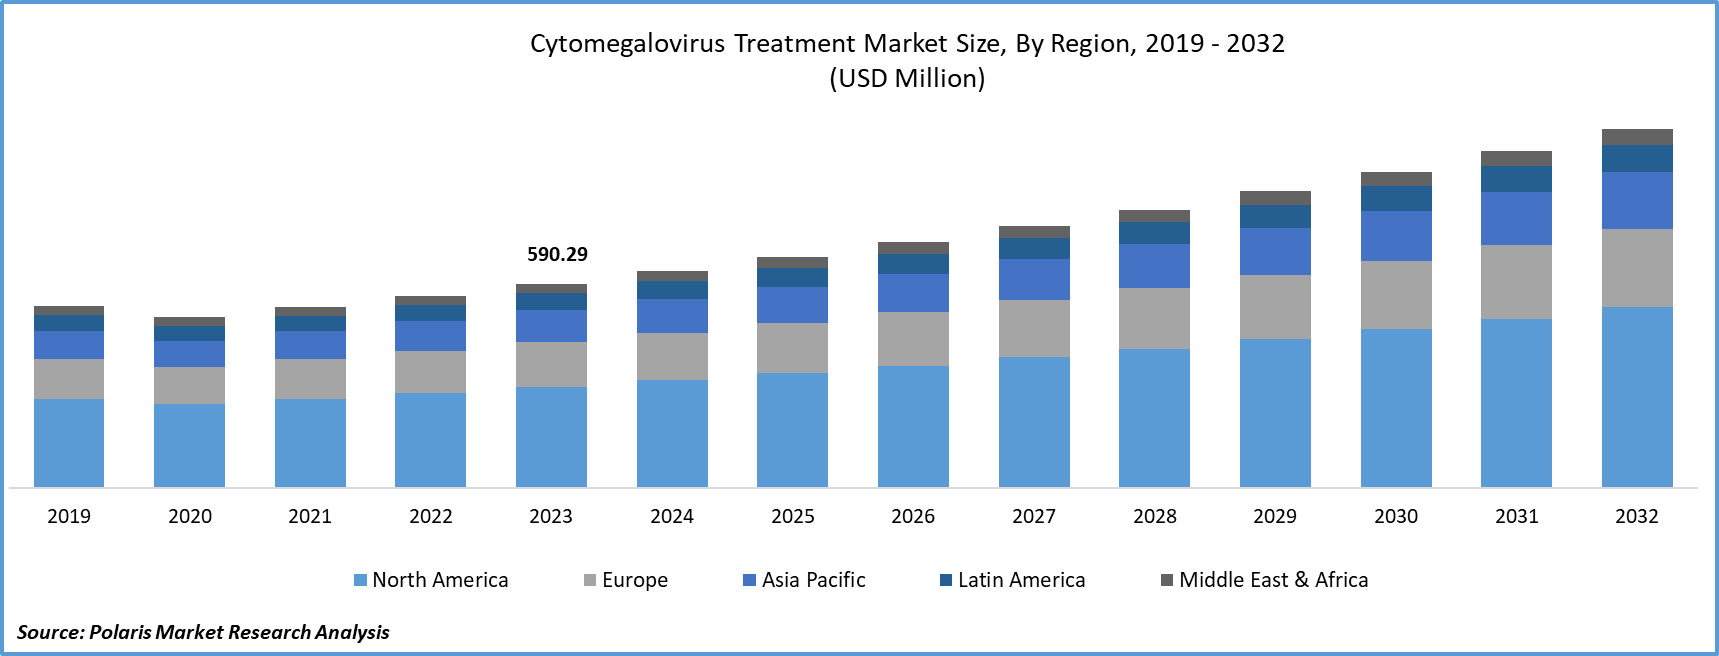 Cytomegalovirus Treatment Market Size